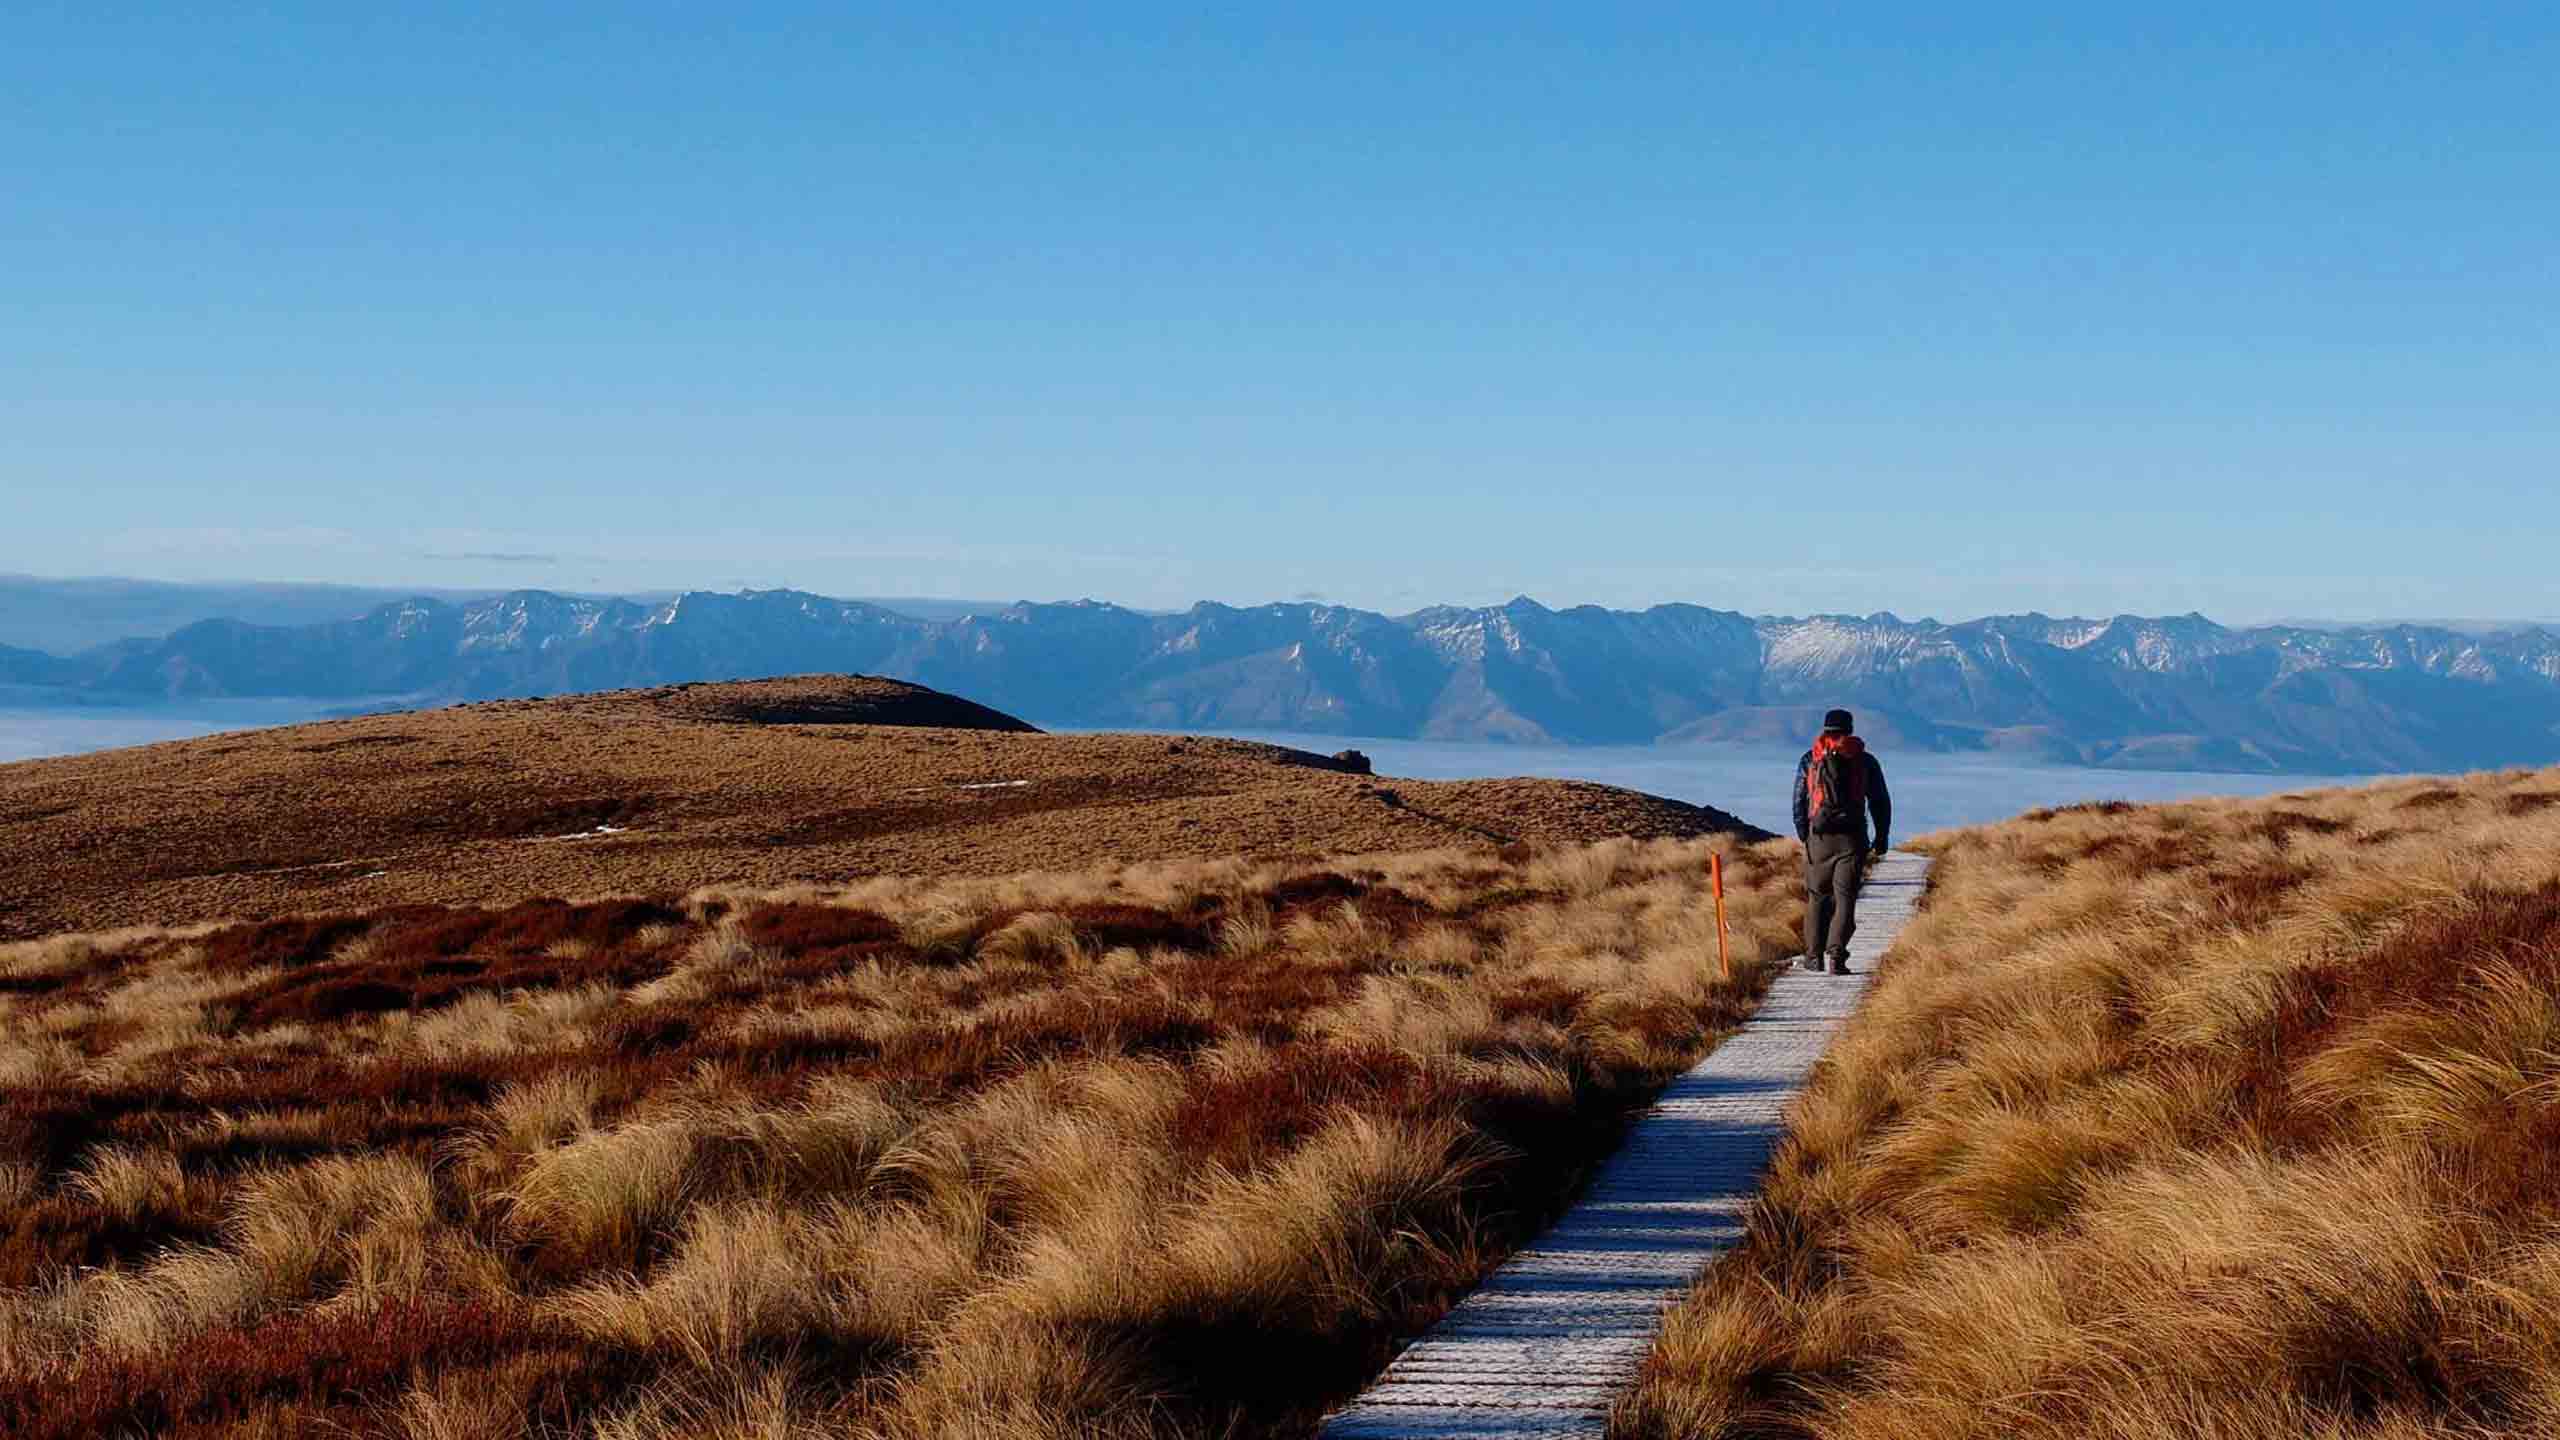 cabot-lodge-new-zealand-fiordland-walk-mountains-person